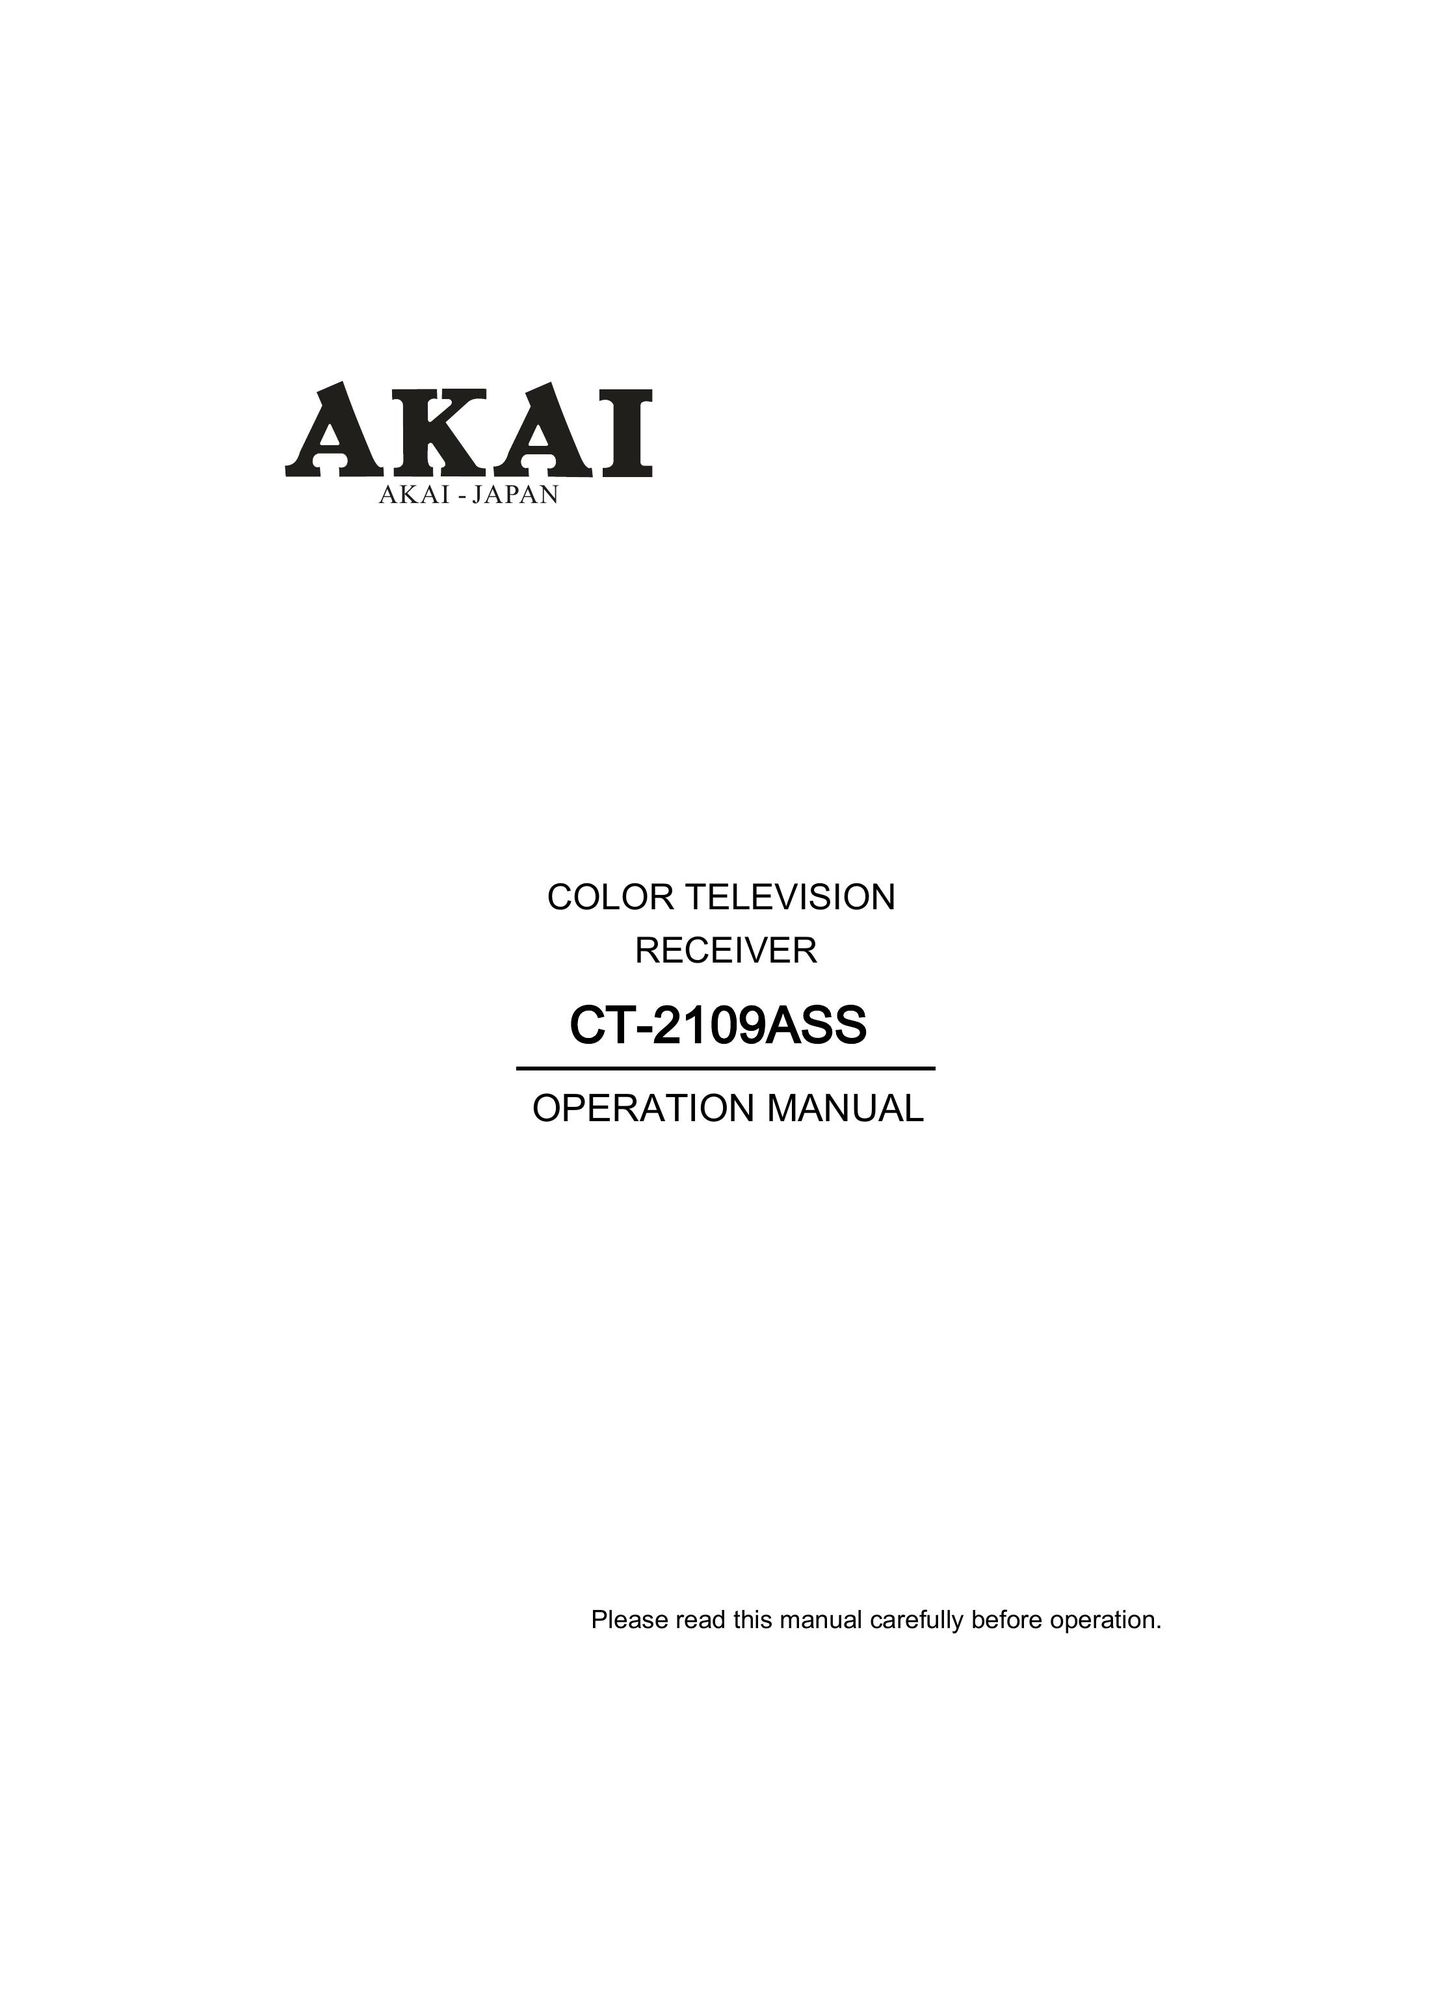 Akai CT-2109ASS CRT Television User Manual